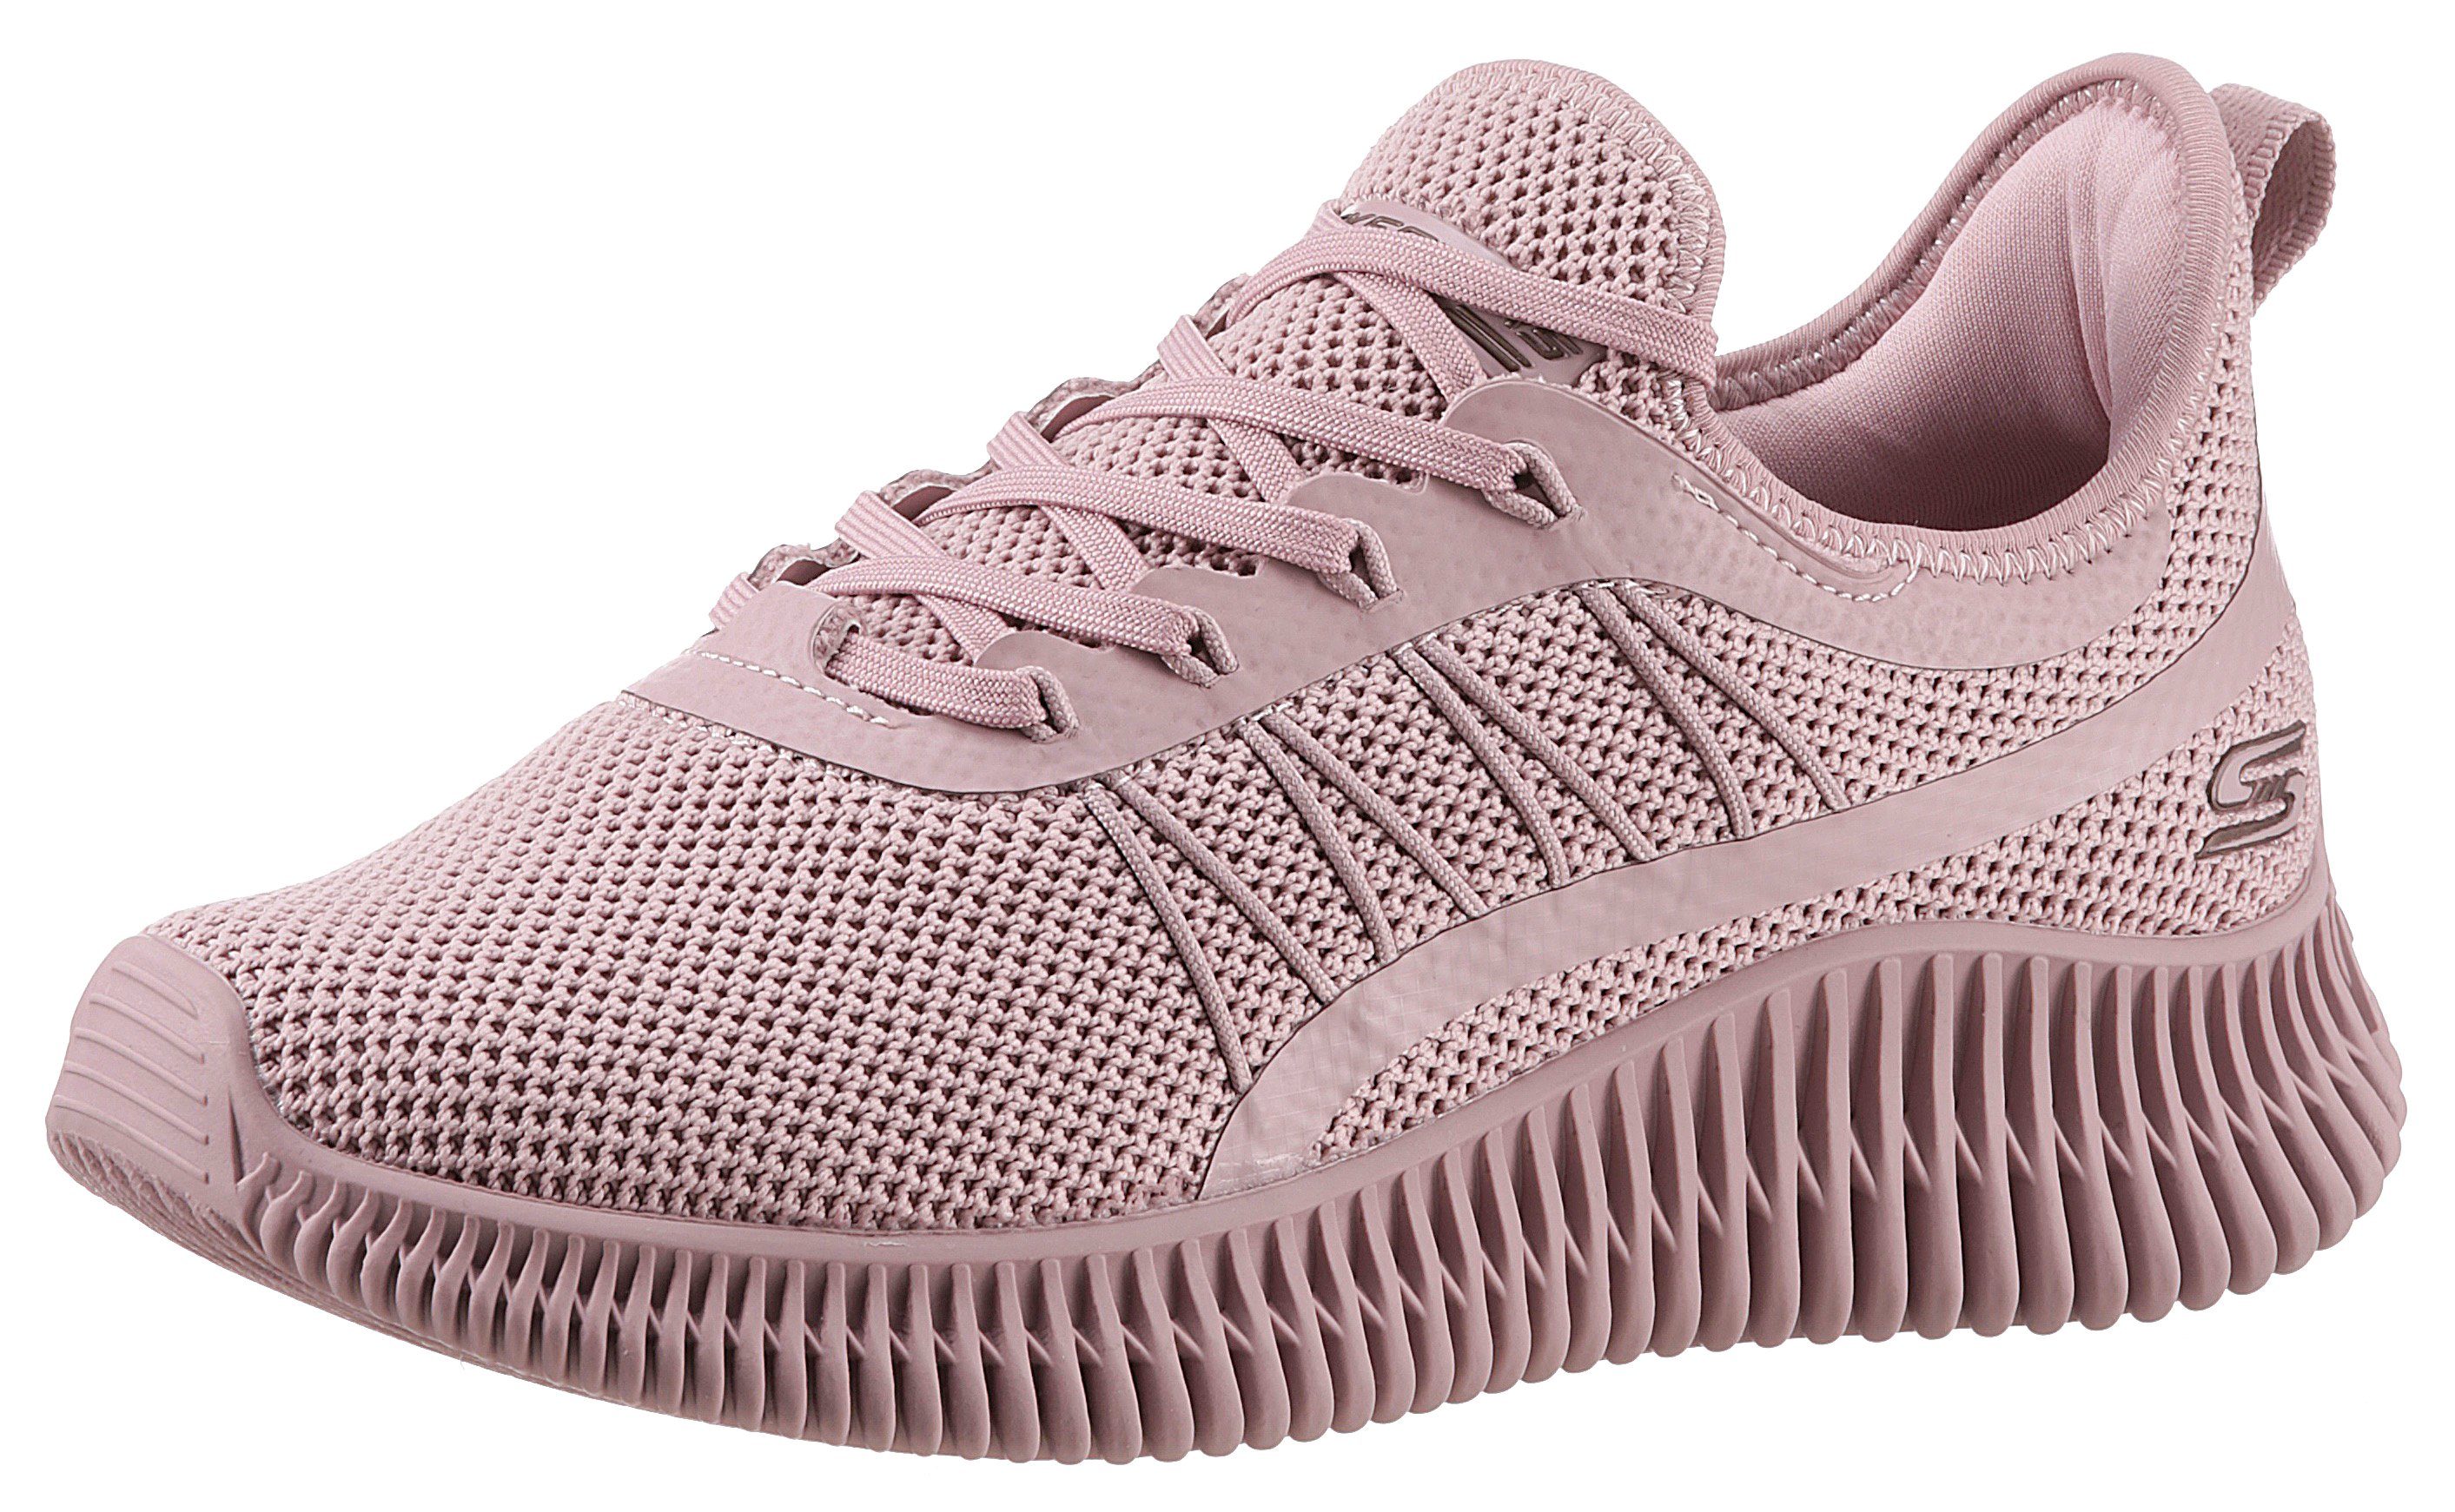 Angebotsrabatt Skechers BOBS in rosa Slip-On veganer Sneaker Verarbeitung GEO